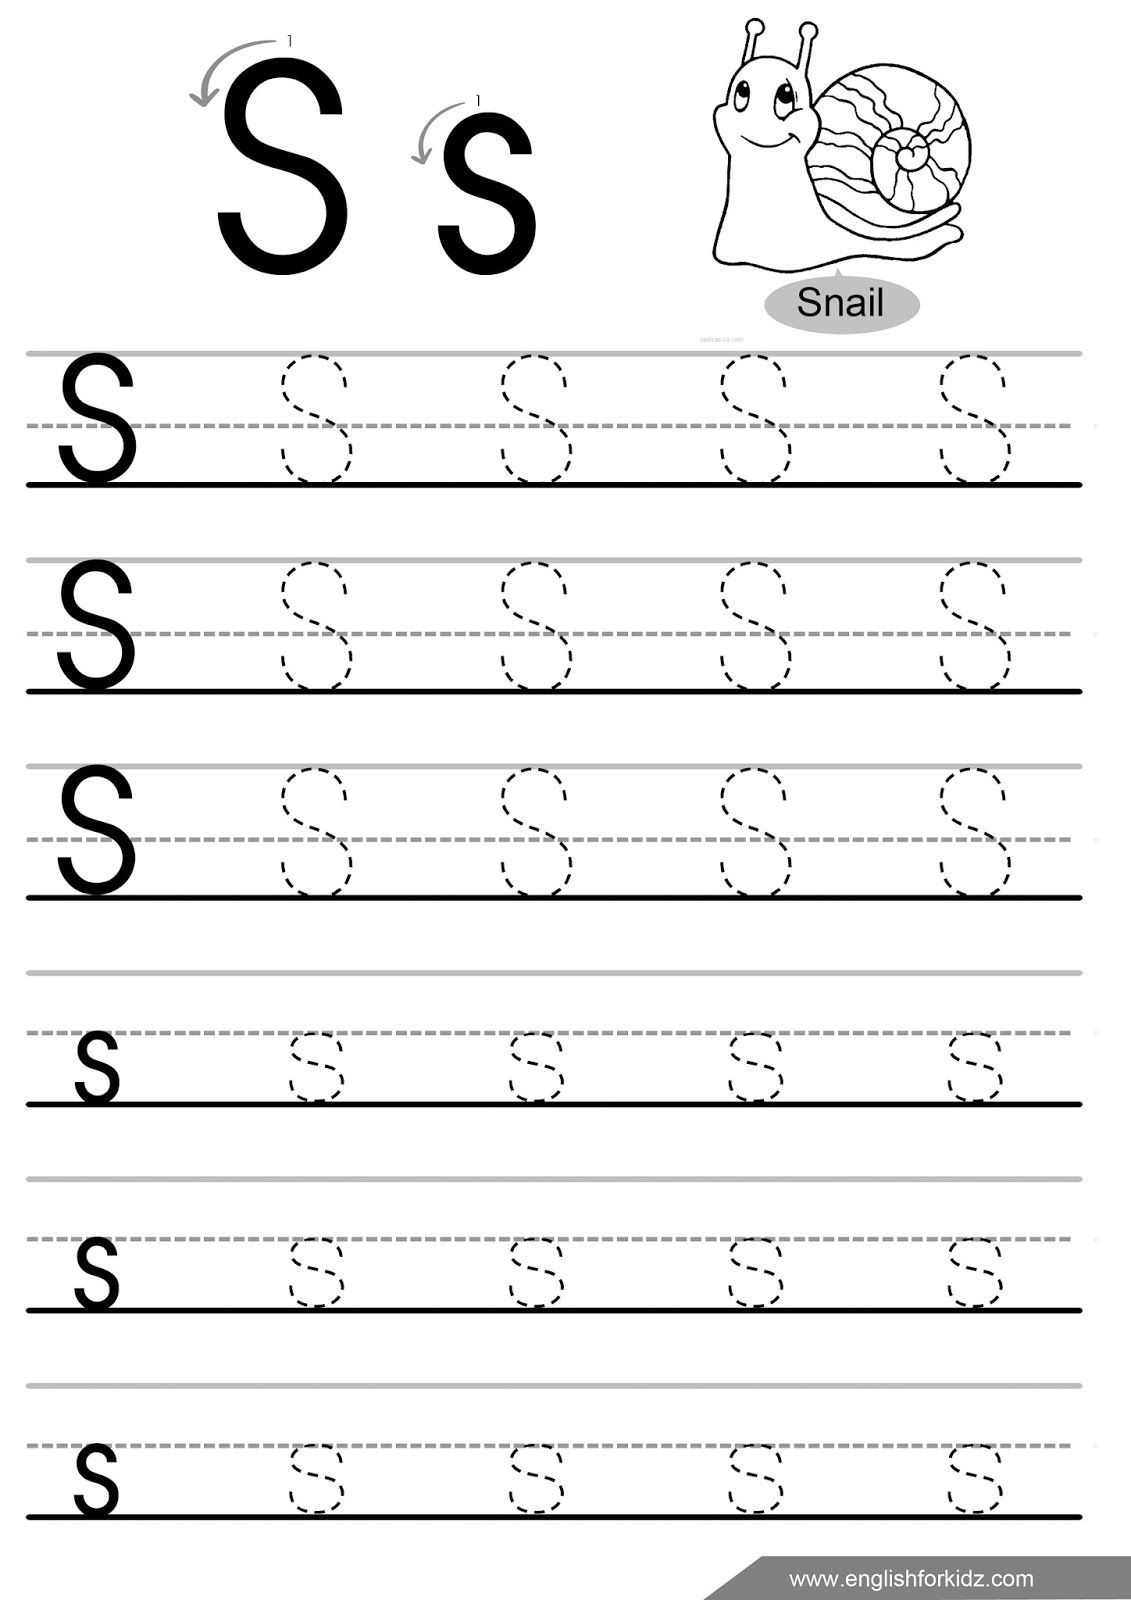 Letter S Tracing Worksheets Preschool  | Letter Tracing intended for S Letter Tracing Worksheet